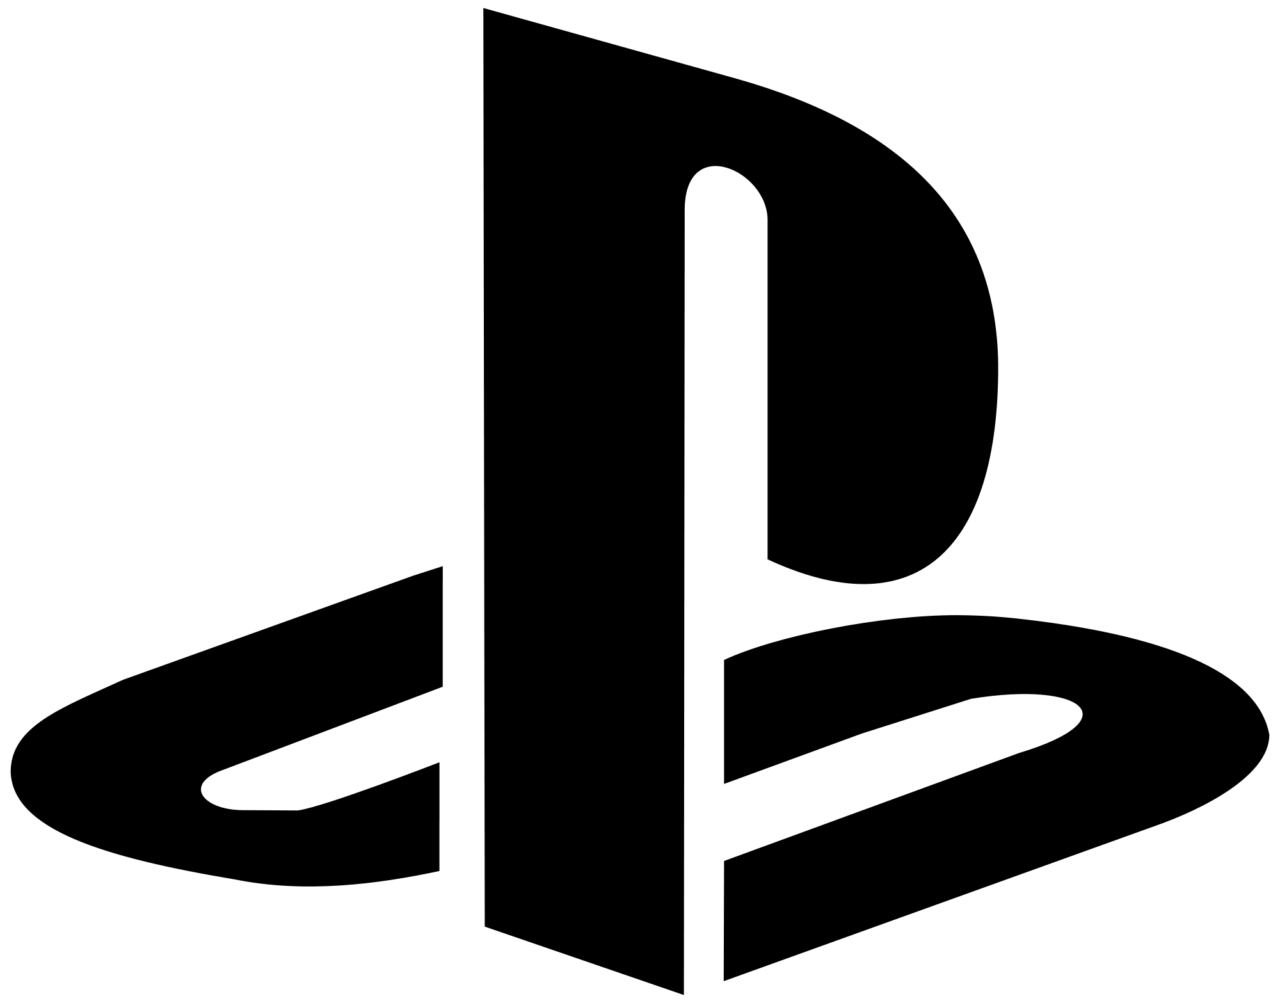 PlayStation_logo.svg_-1280x1003.png